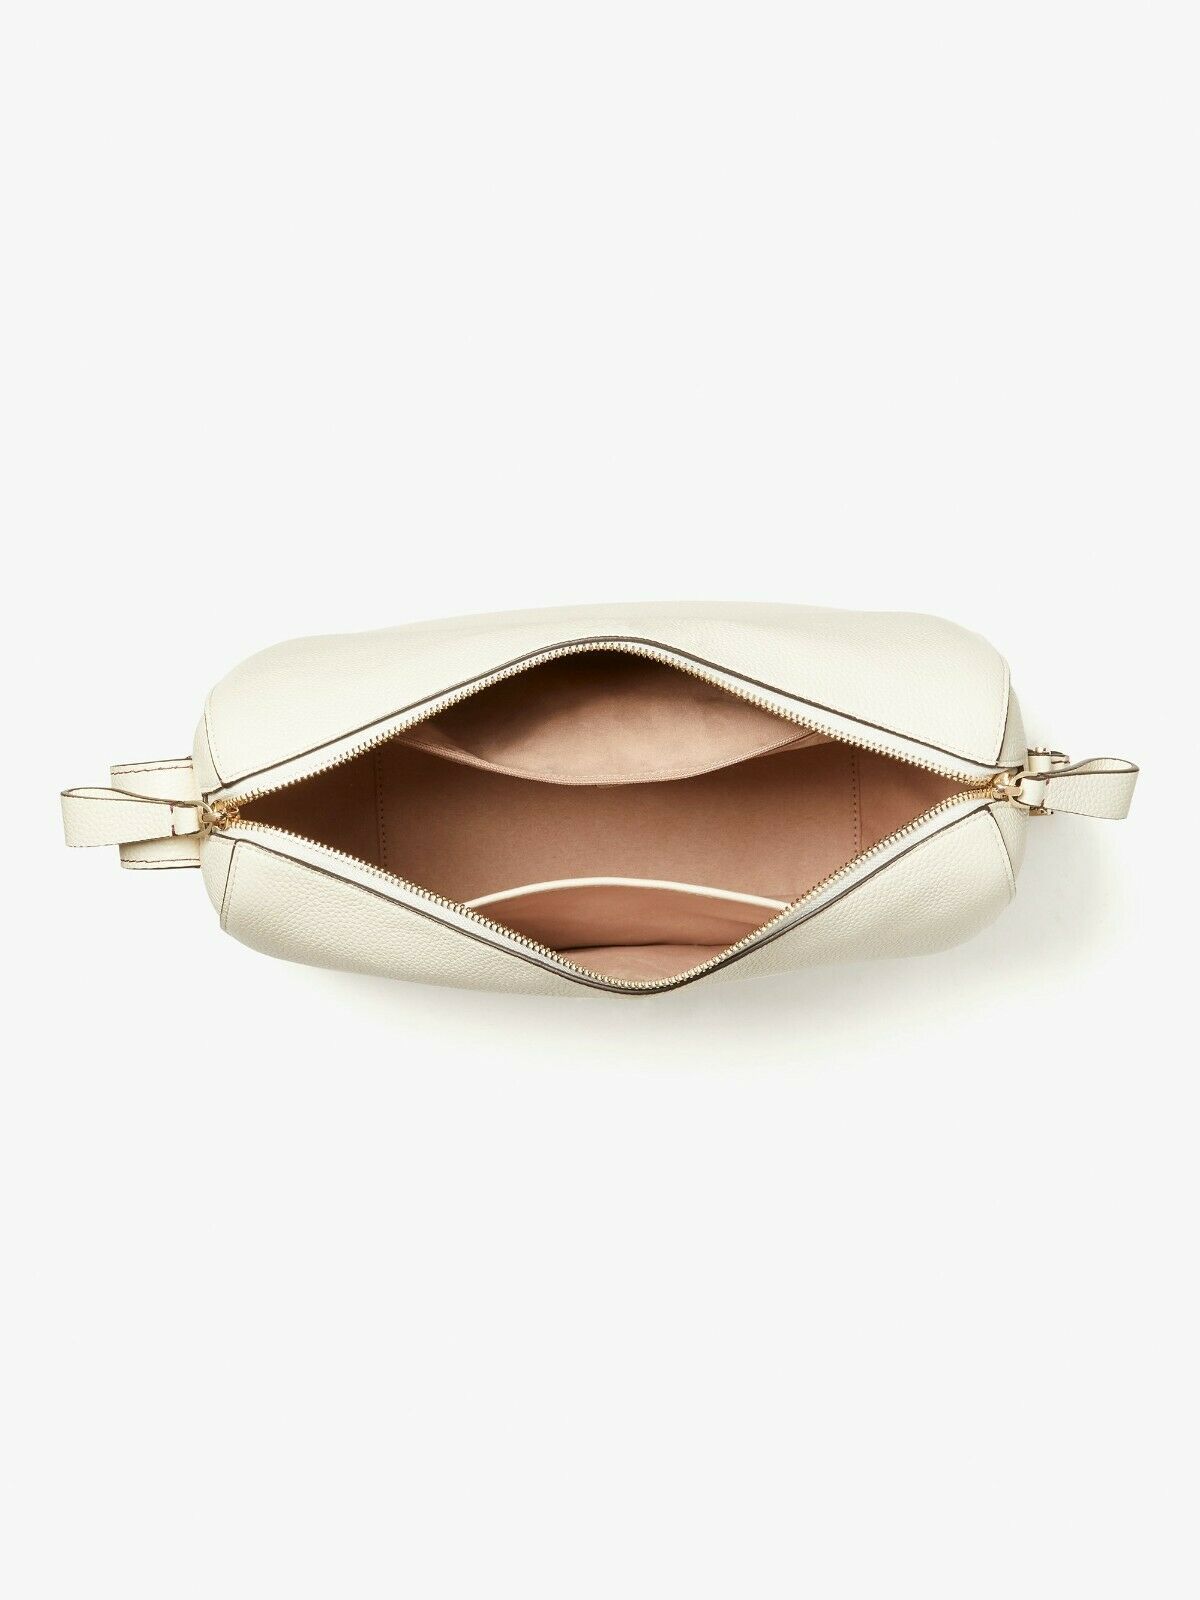 Kate Spade Anyday Medium Shoulder Bag Cream Leather PXR00248 White NWT $298  FS